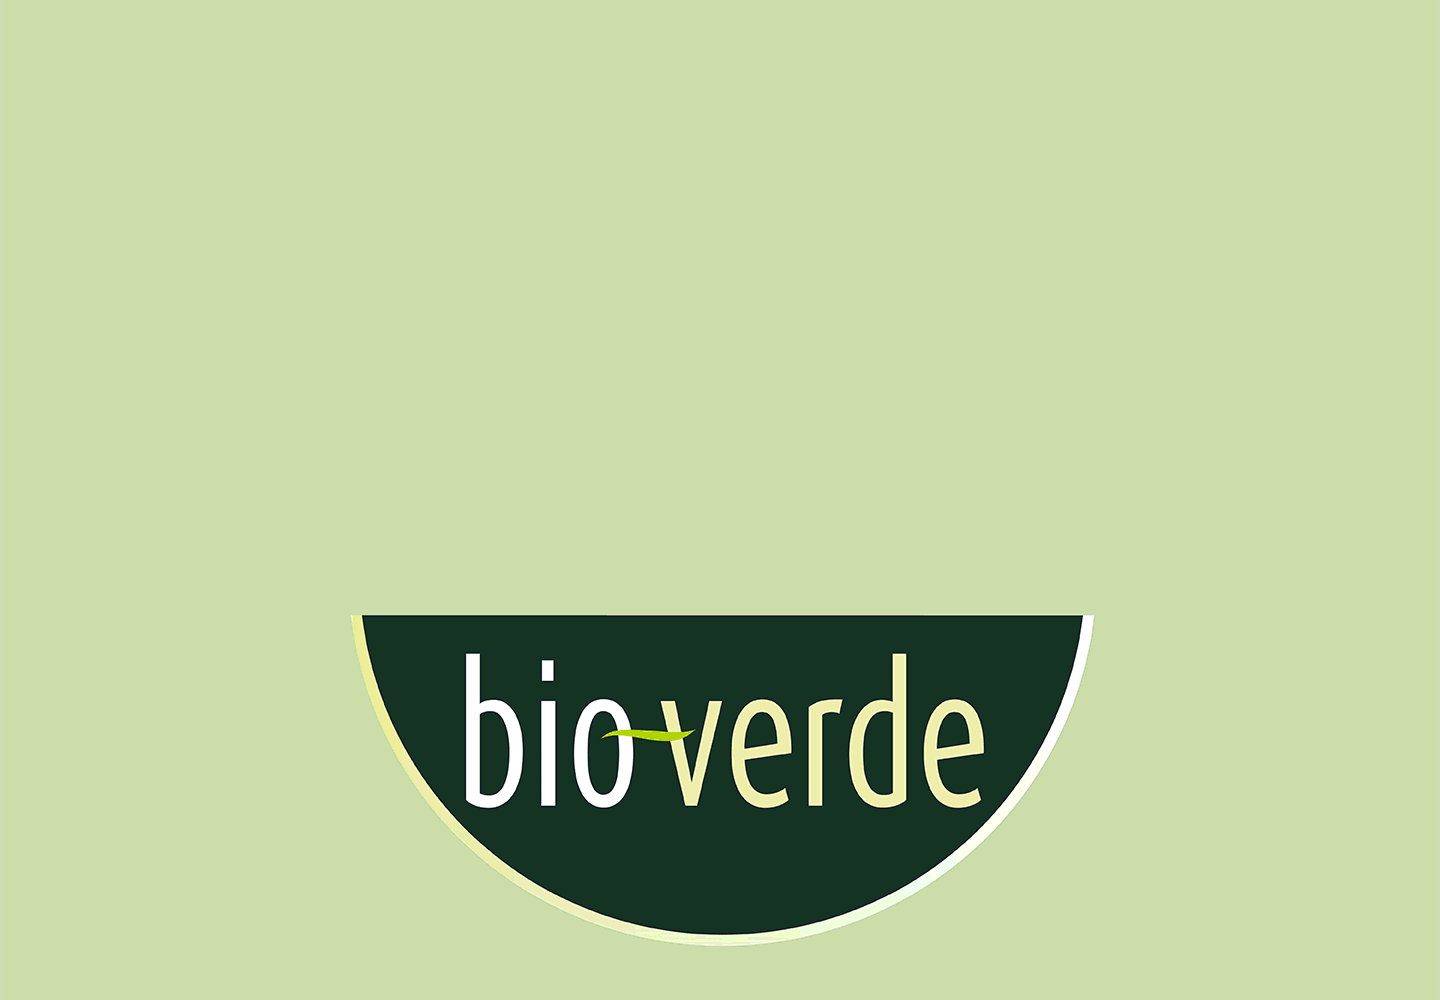 Bioverde_Relaunch_03